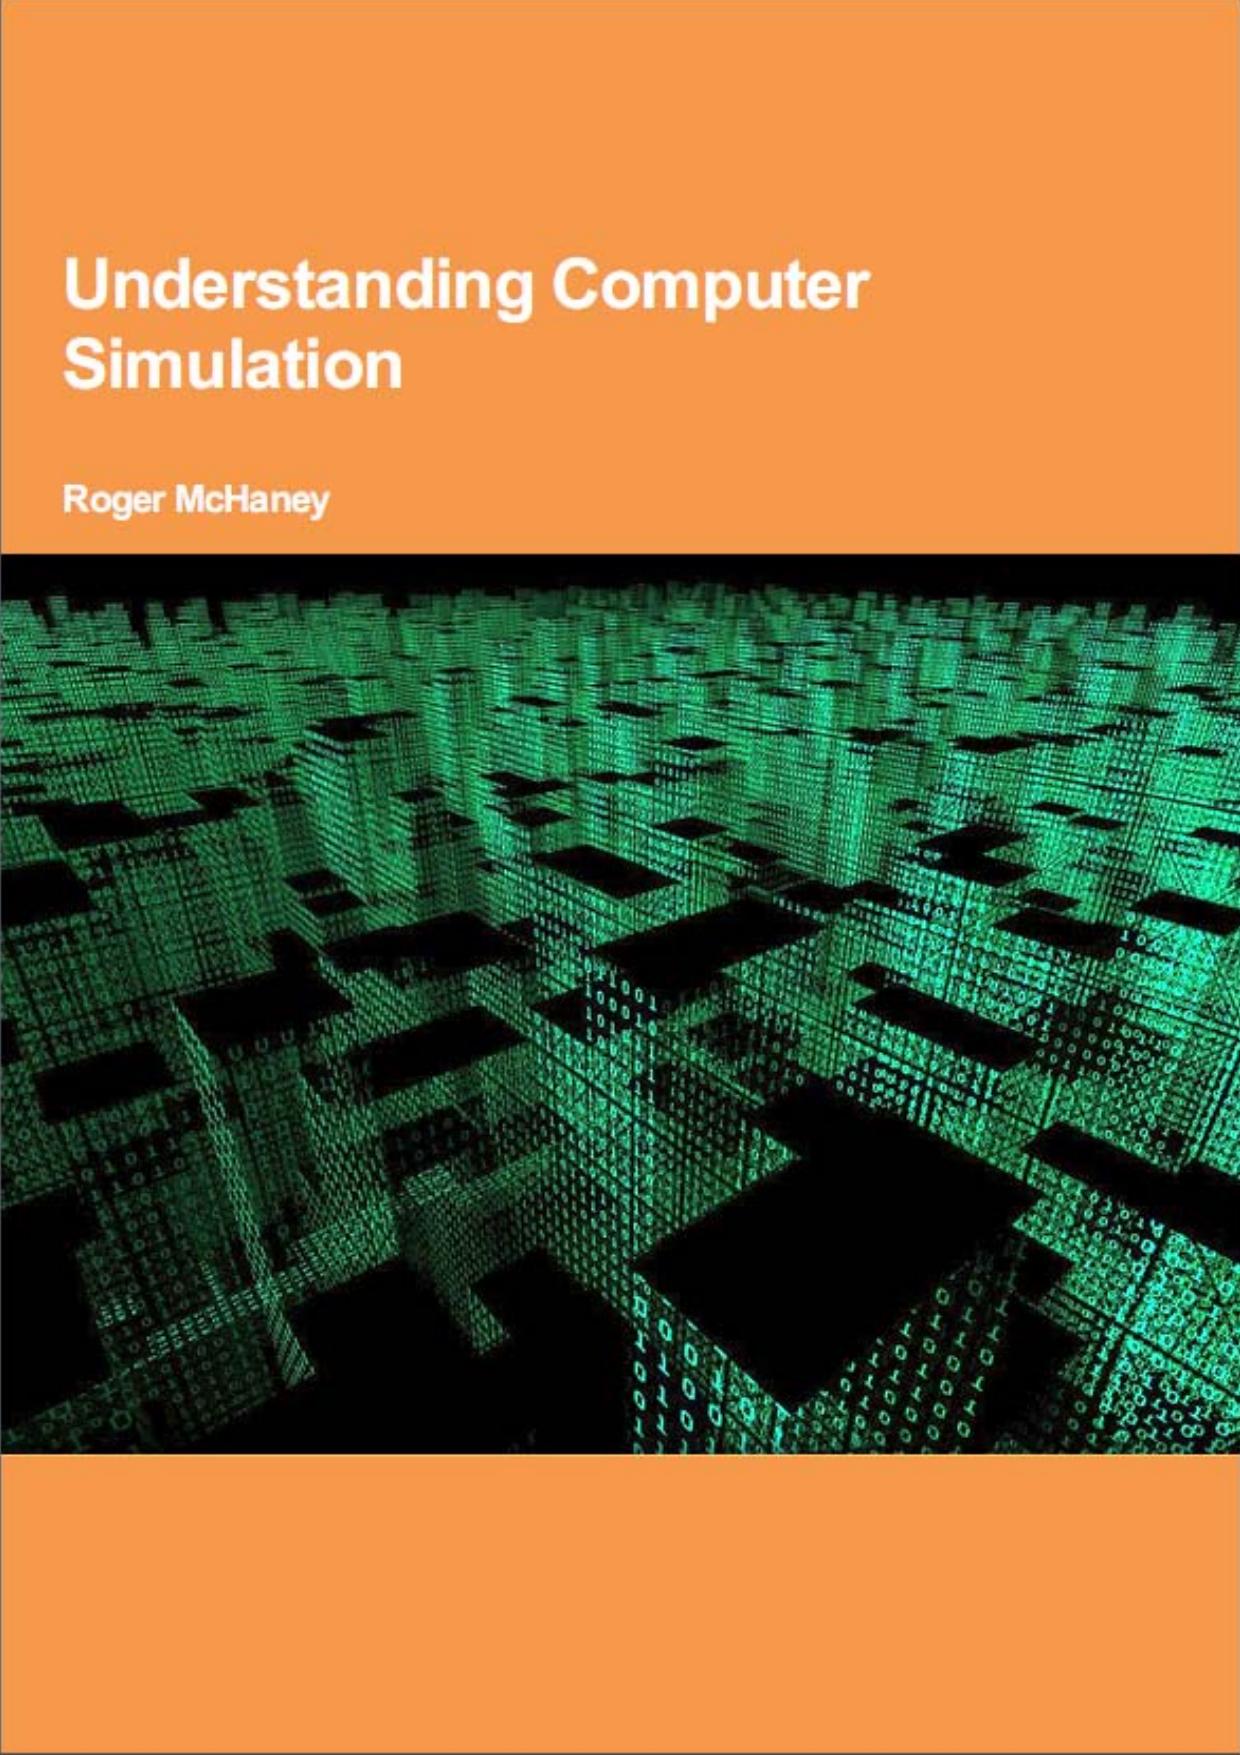 Understanding Computer Simulation 2009.pdf